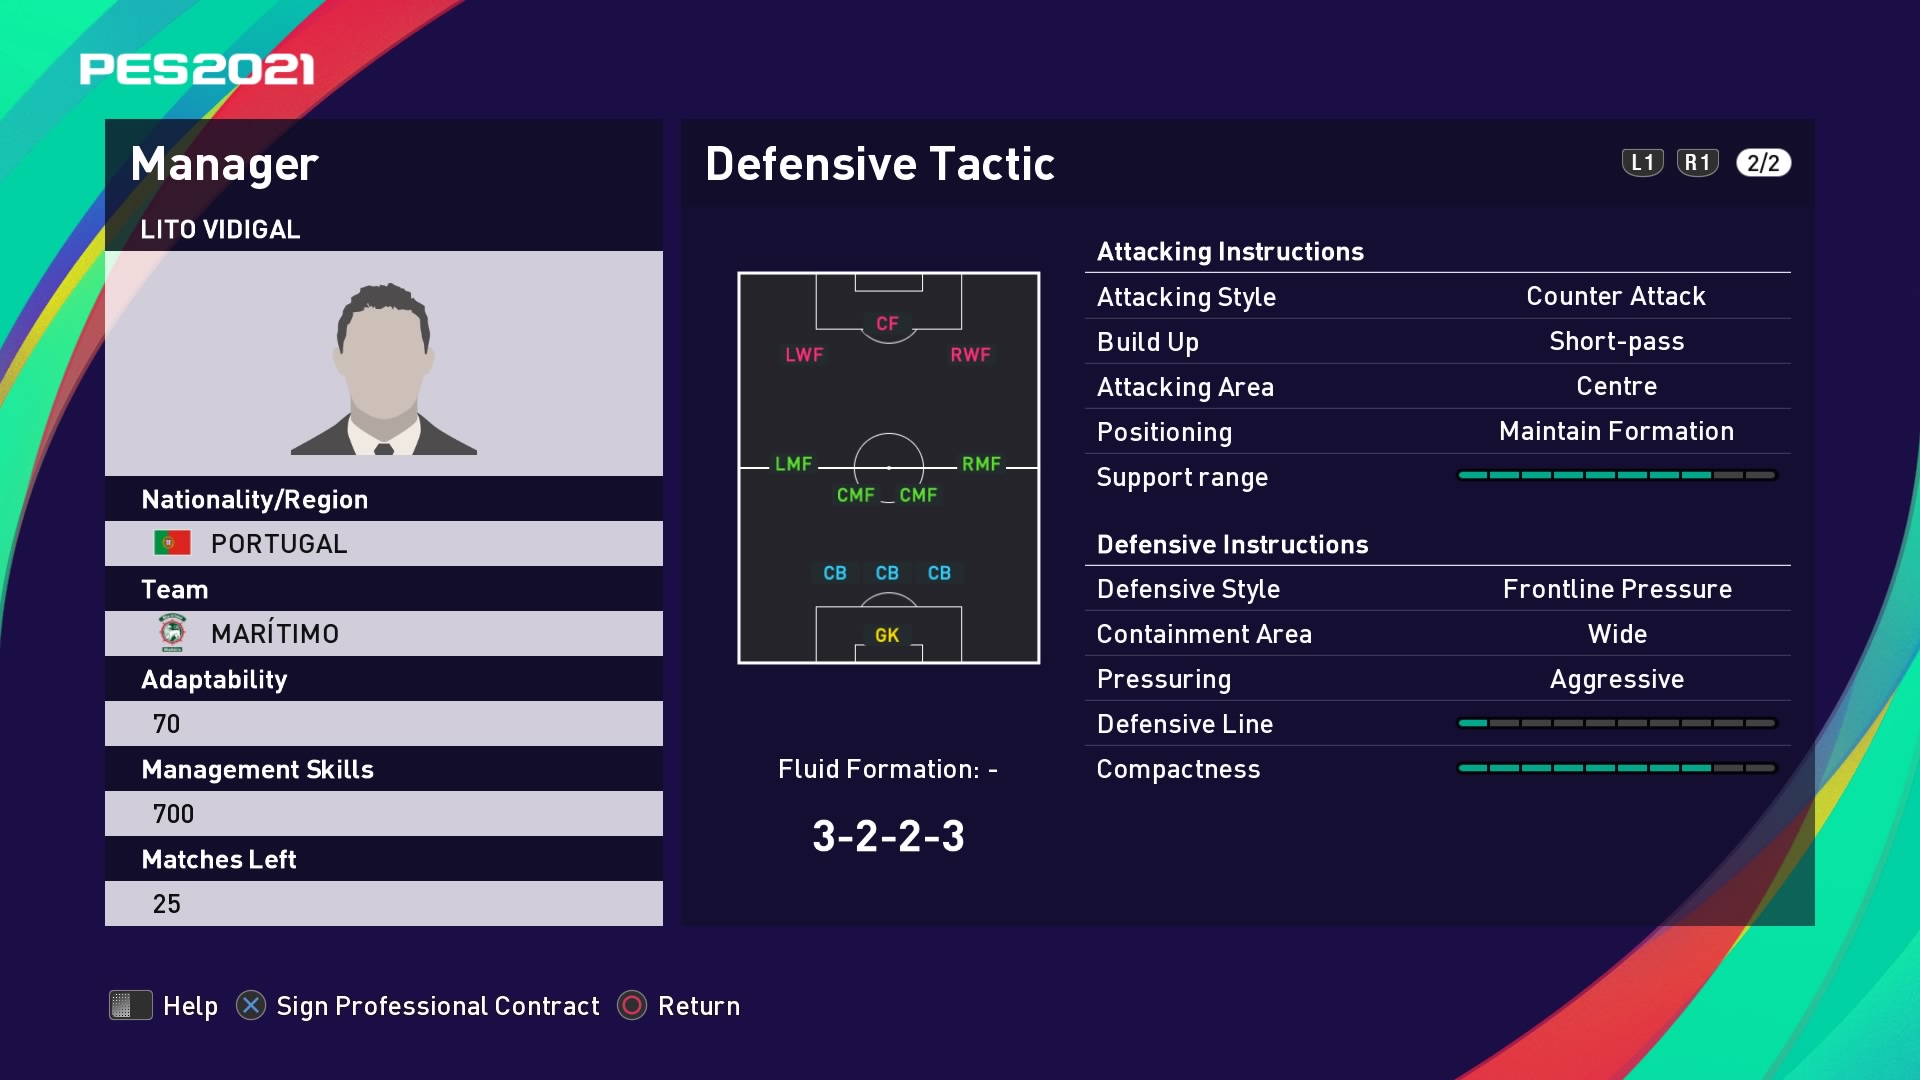 Lito Vidigal Defensive Tactic in PES 2021 myClub